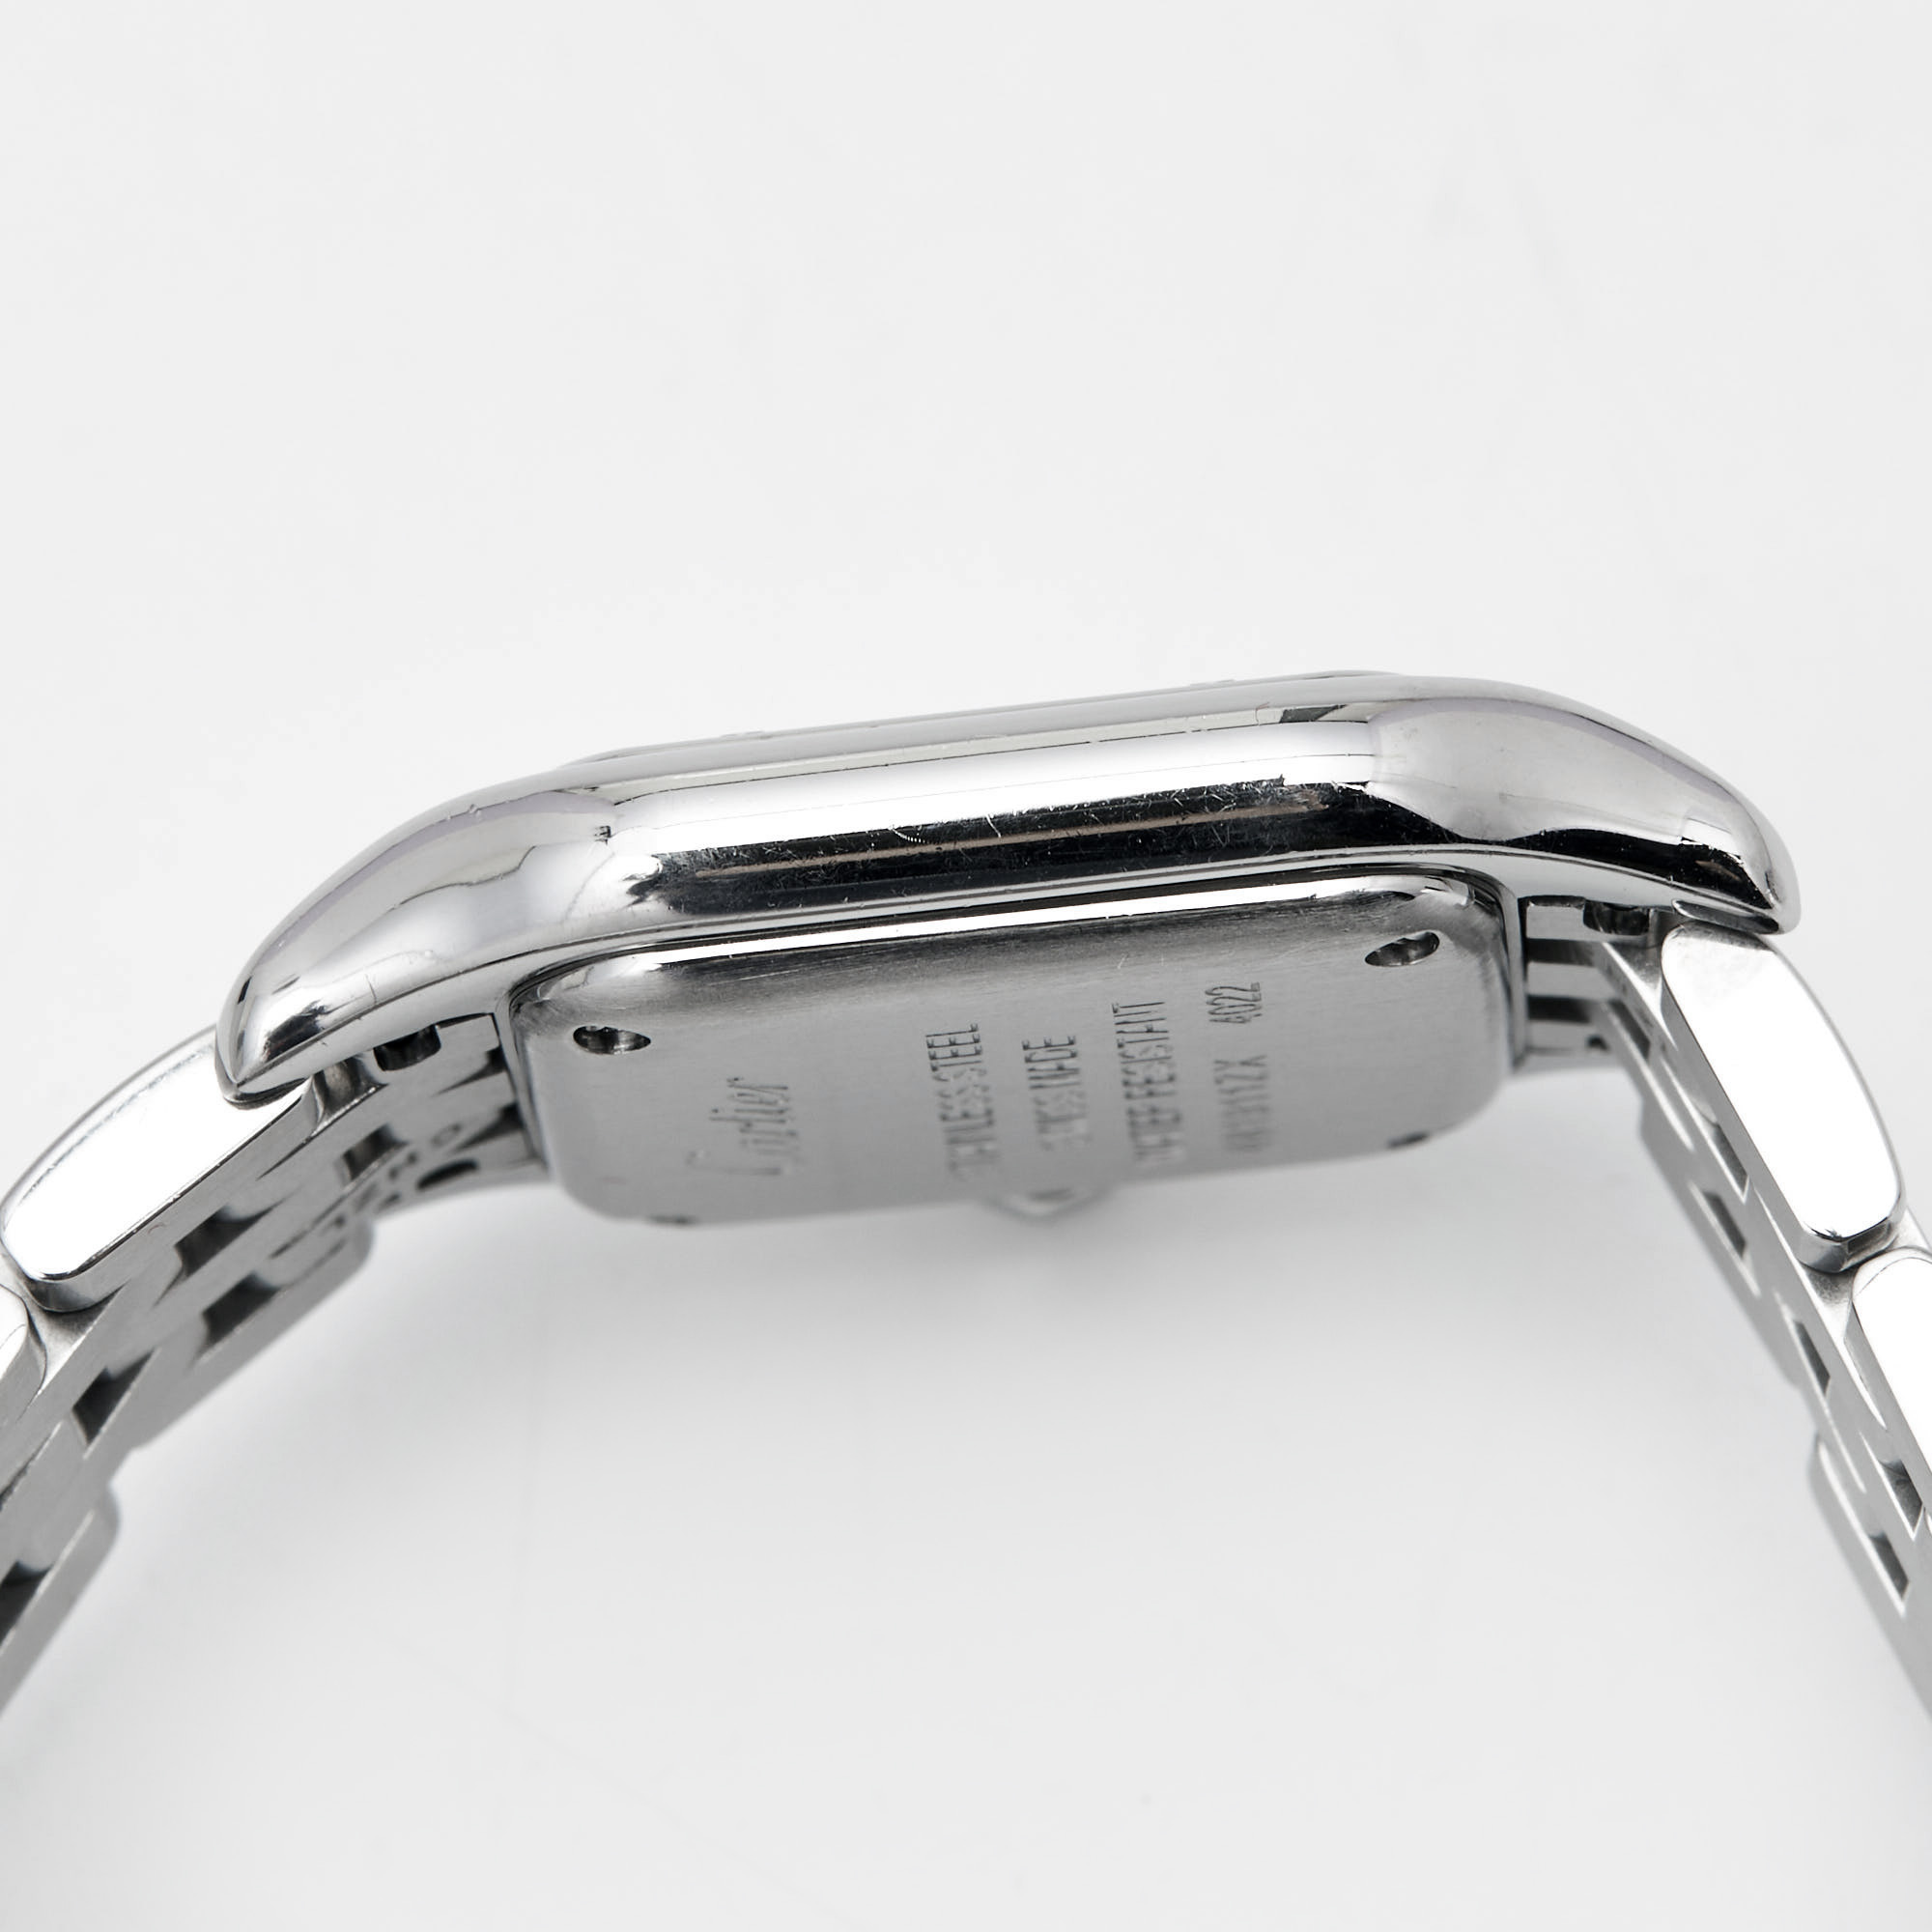 Cartier Silver Stainless Steel Diamond Panthere W4PN0007 Women's Wristwatch 22 Mm